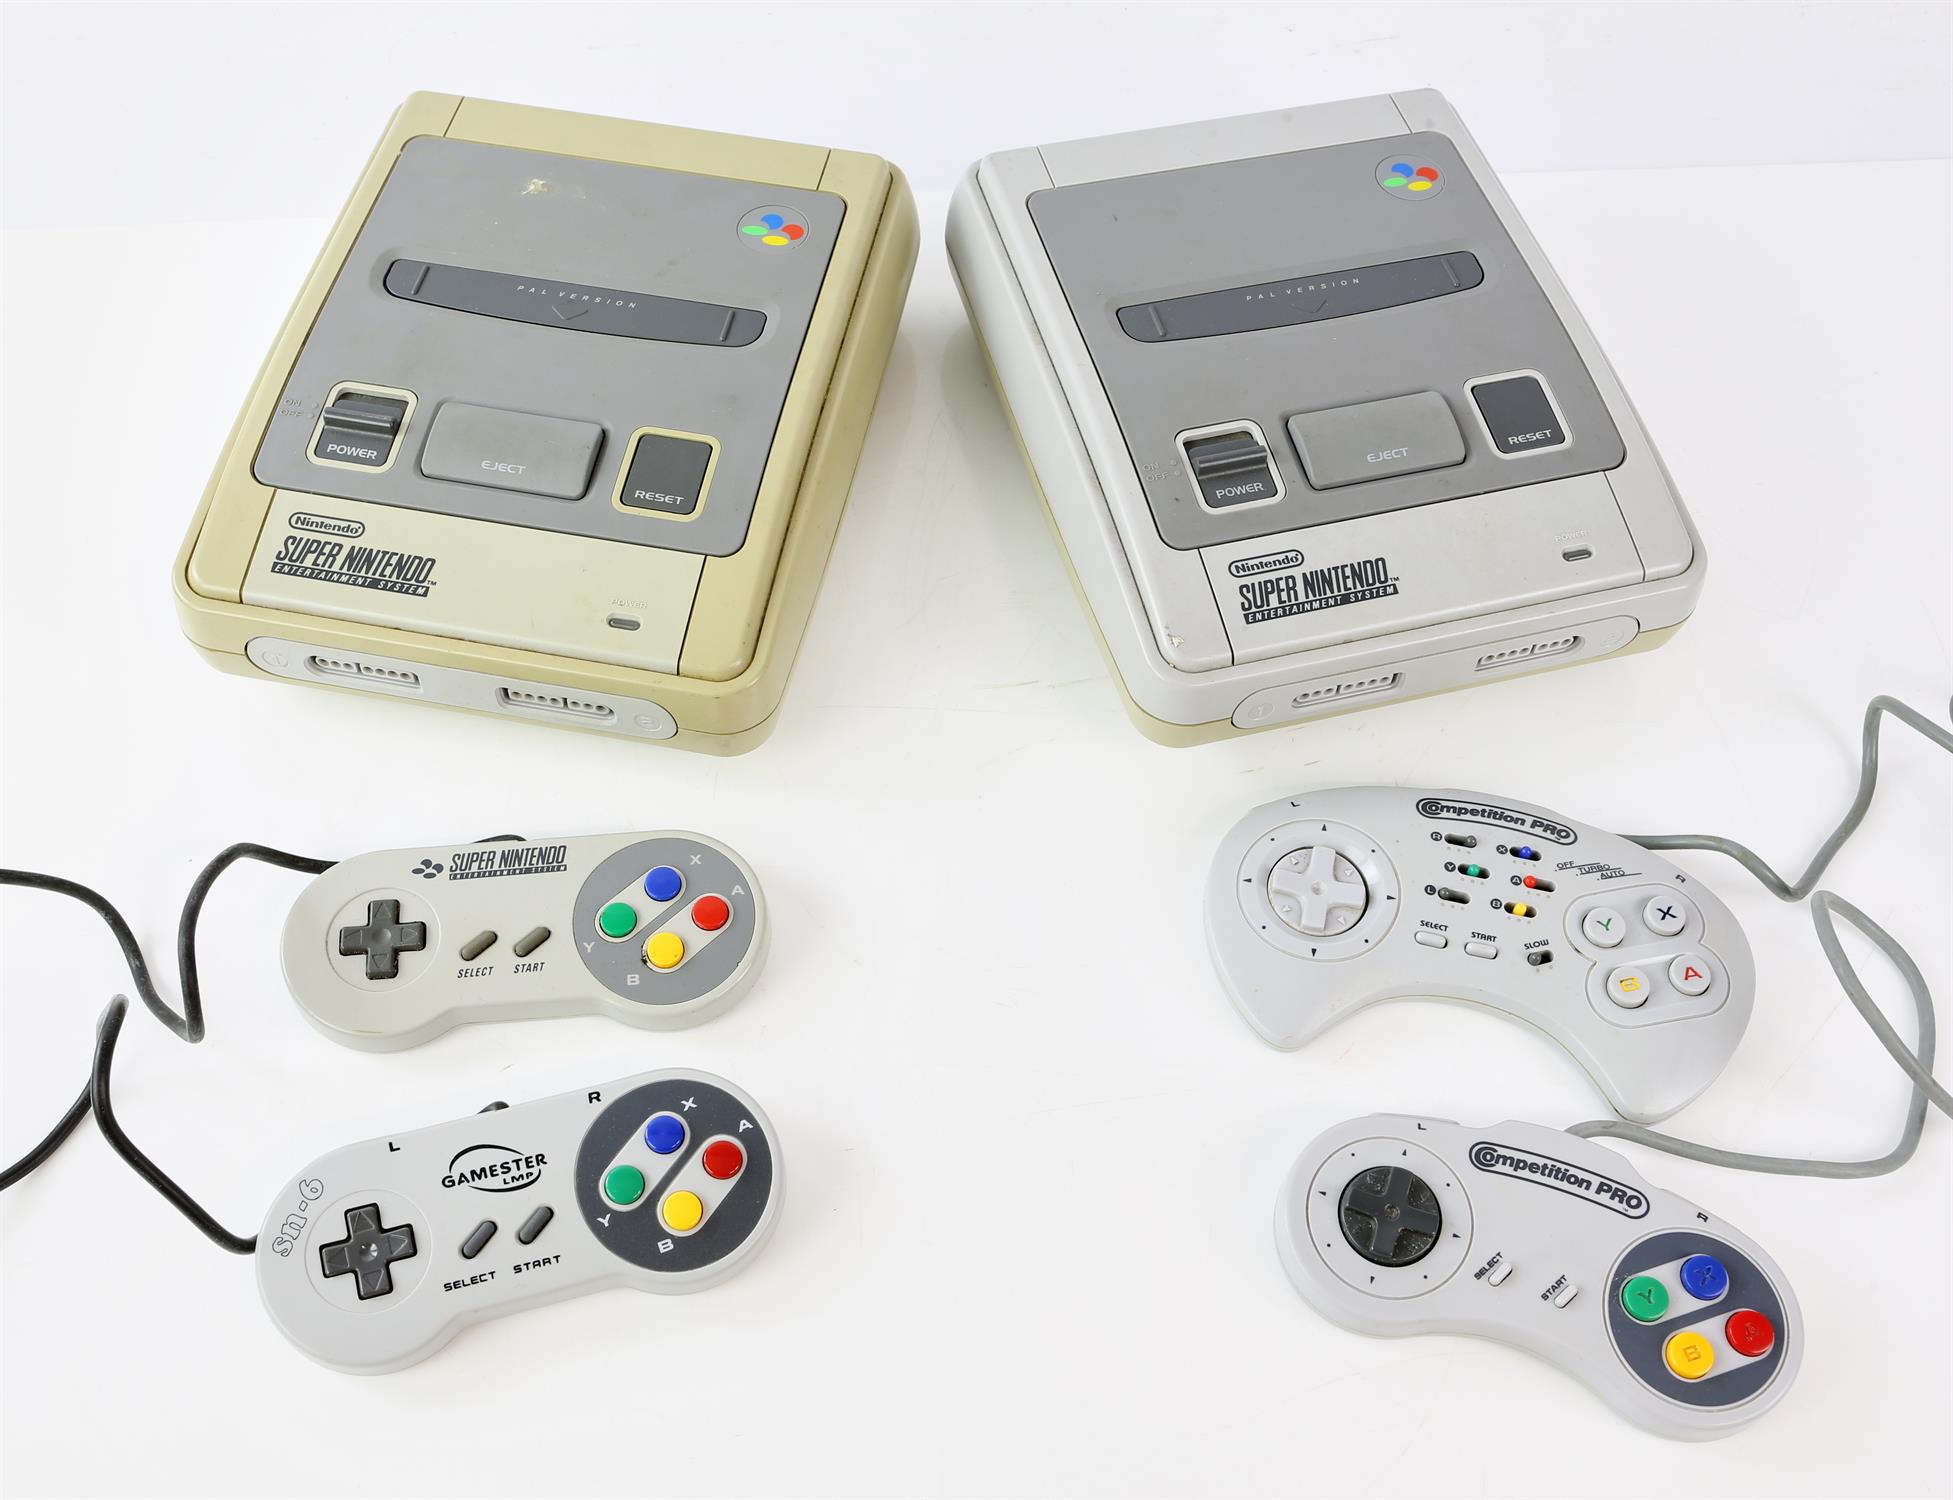 2 SNES - Super Nintendo Entertainment System Consoles. This lot contains two SNES consoles,